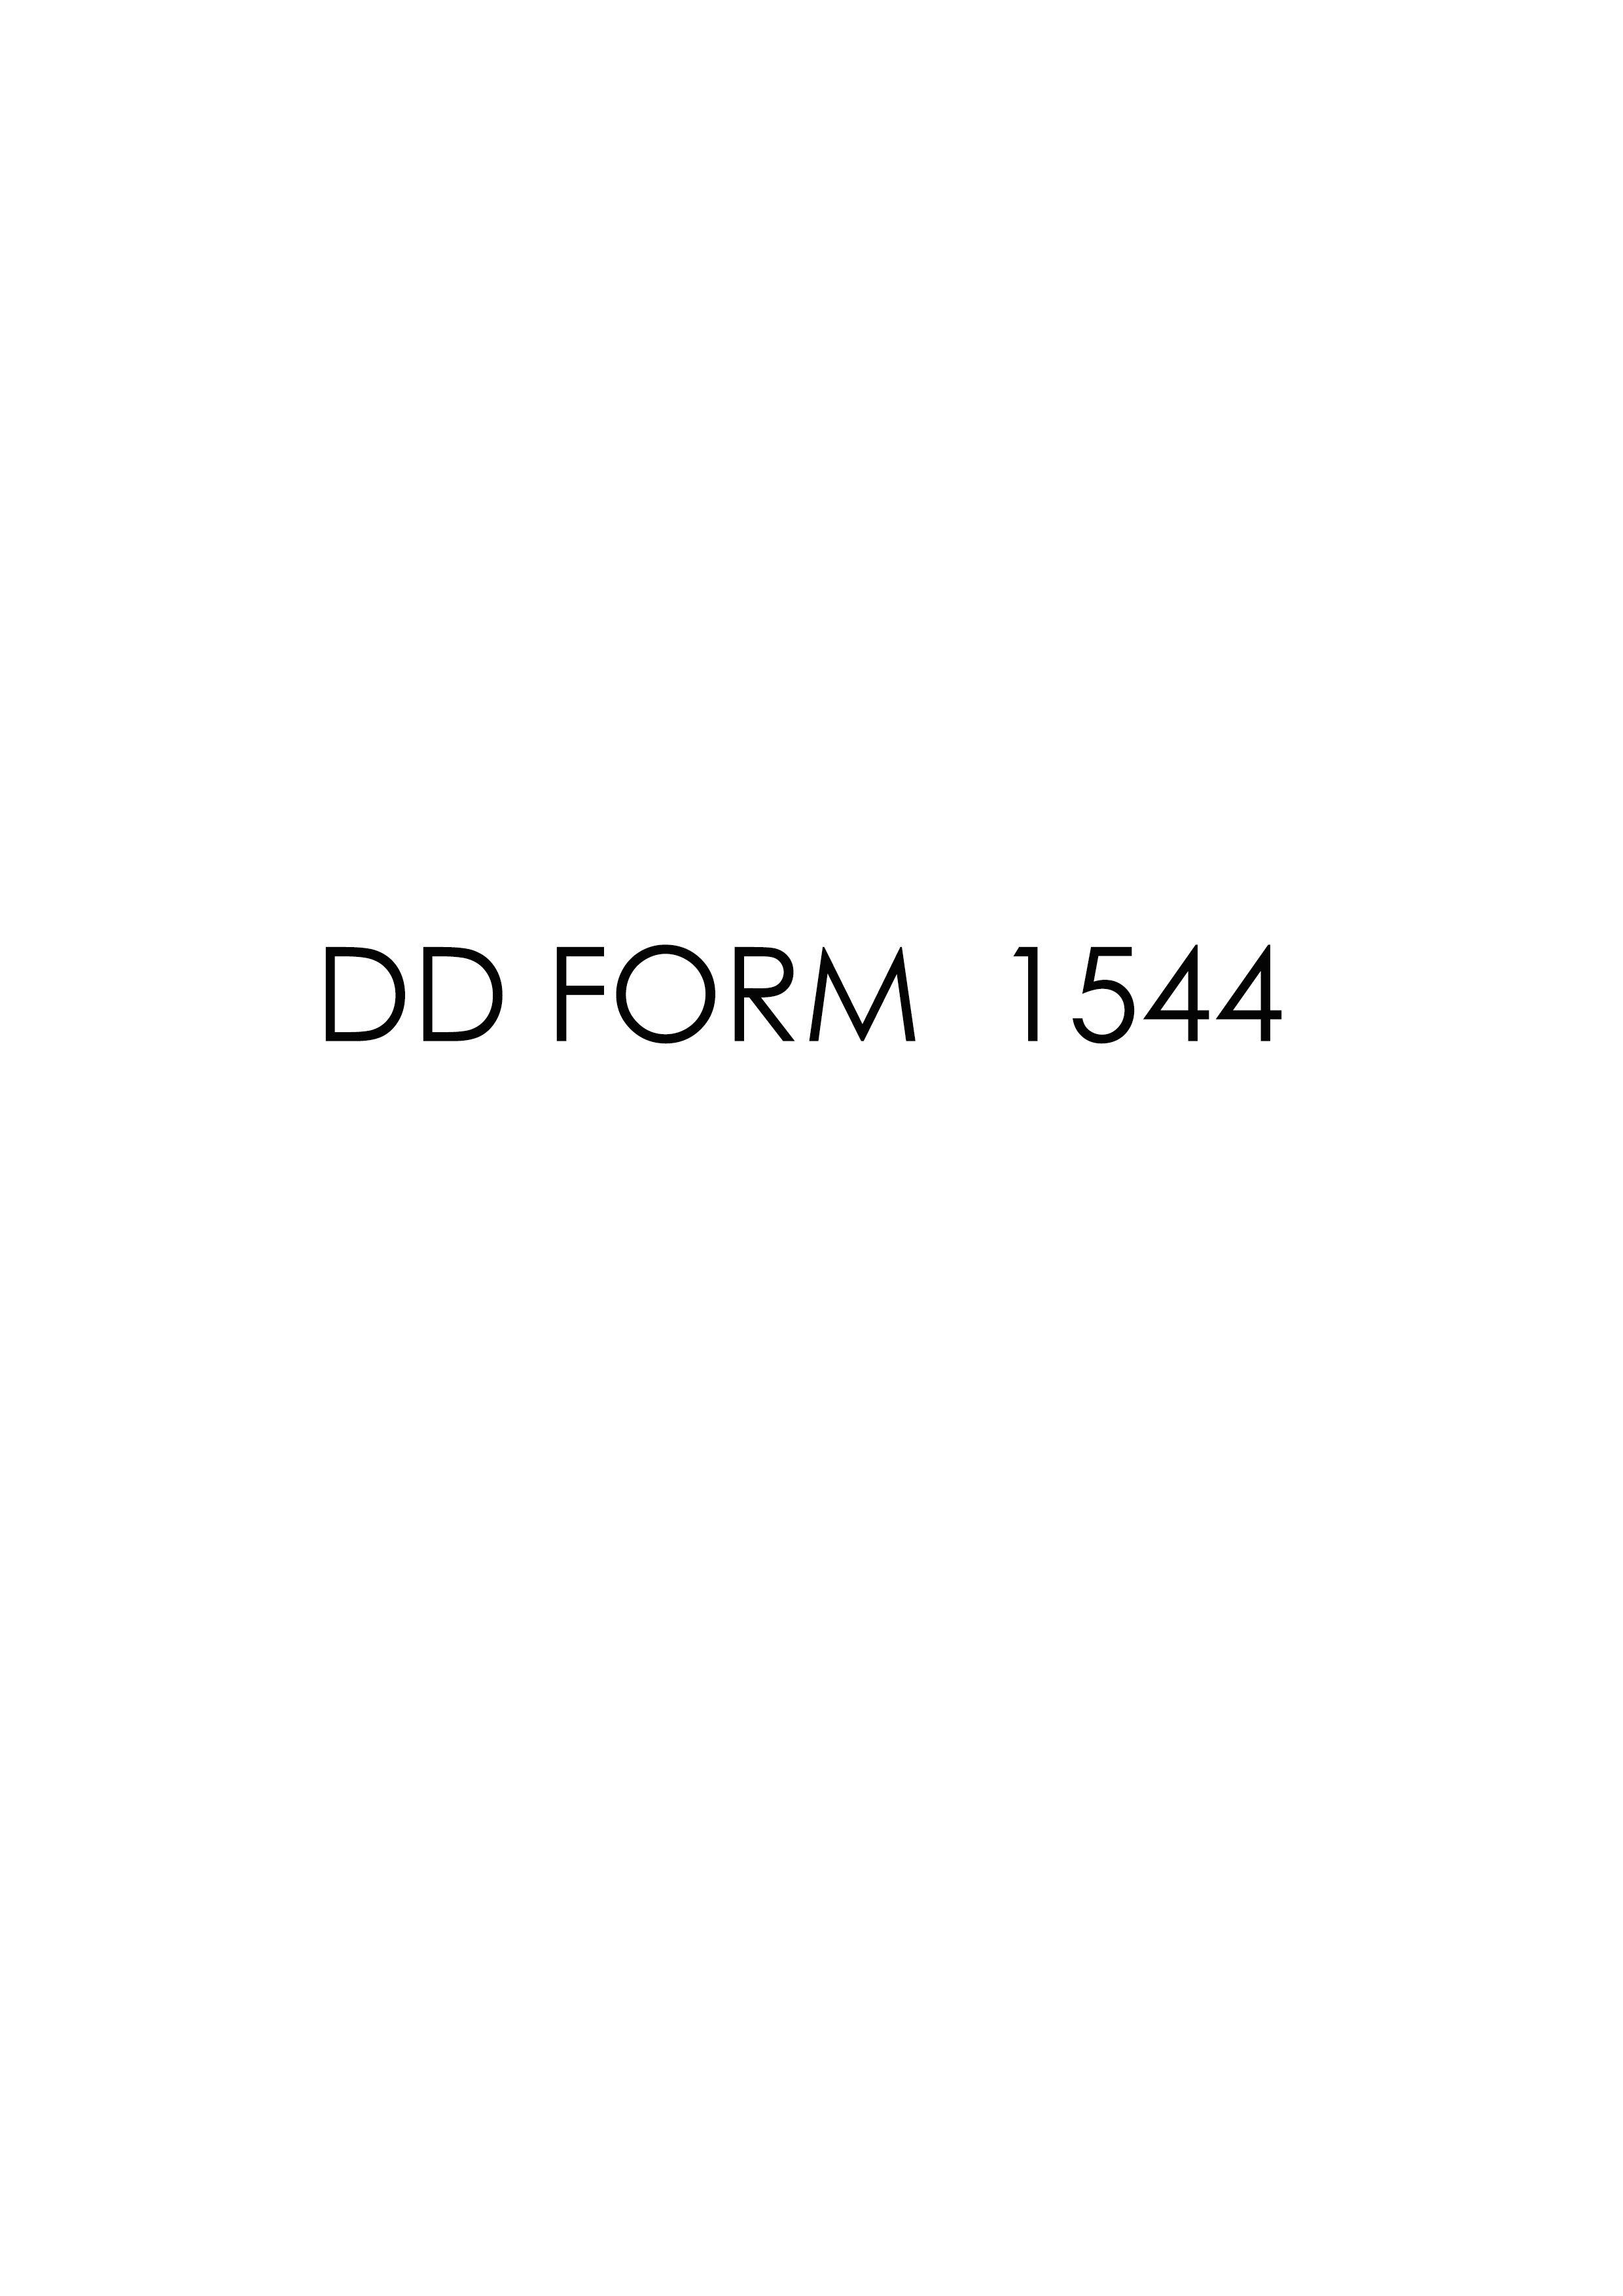 Download dd form 1544